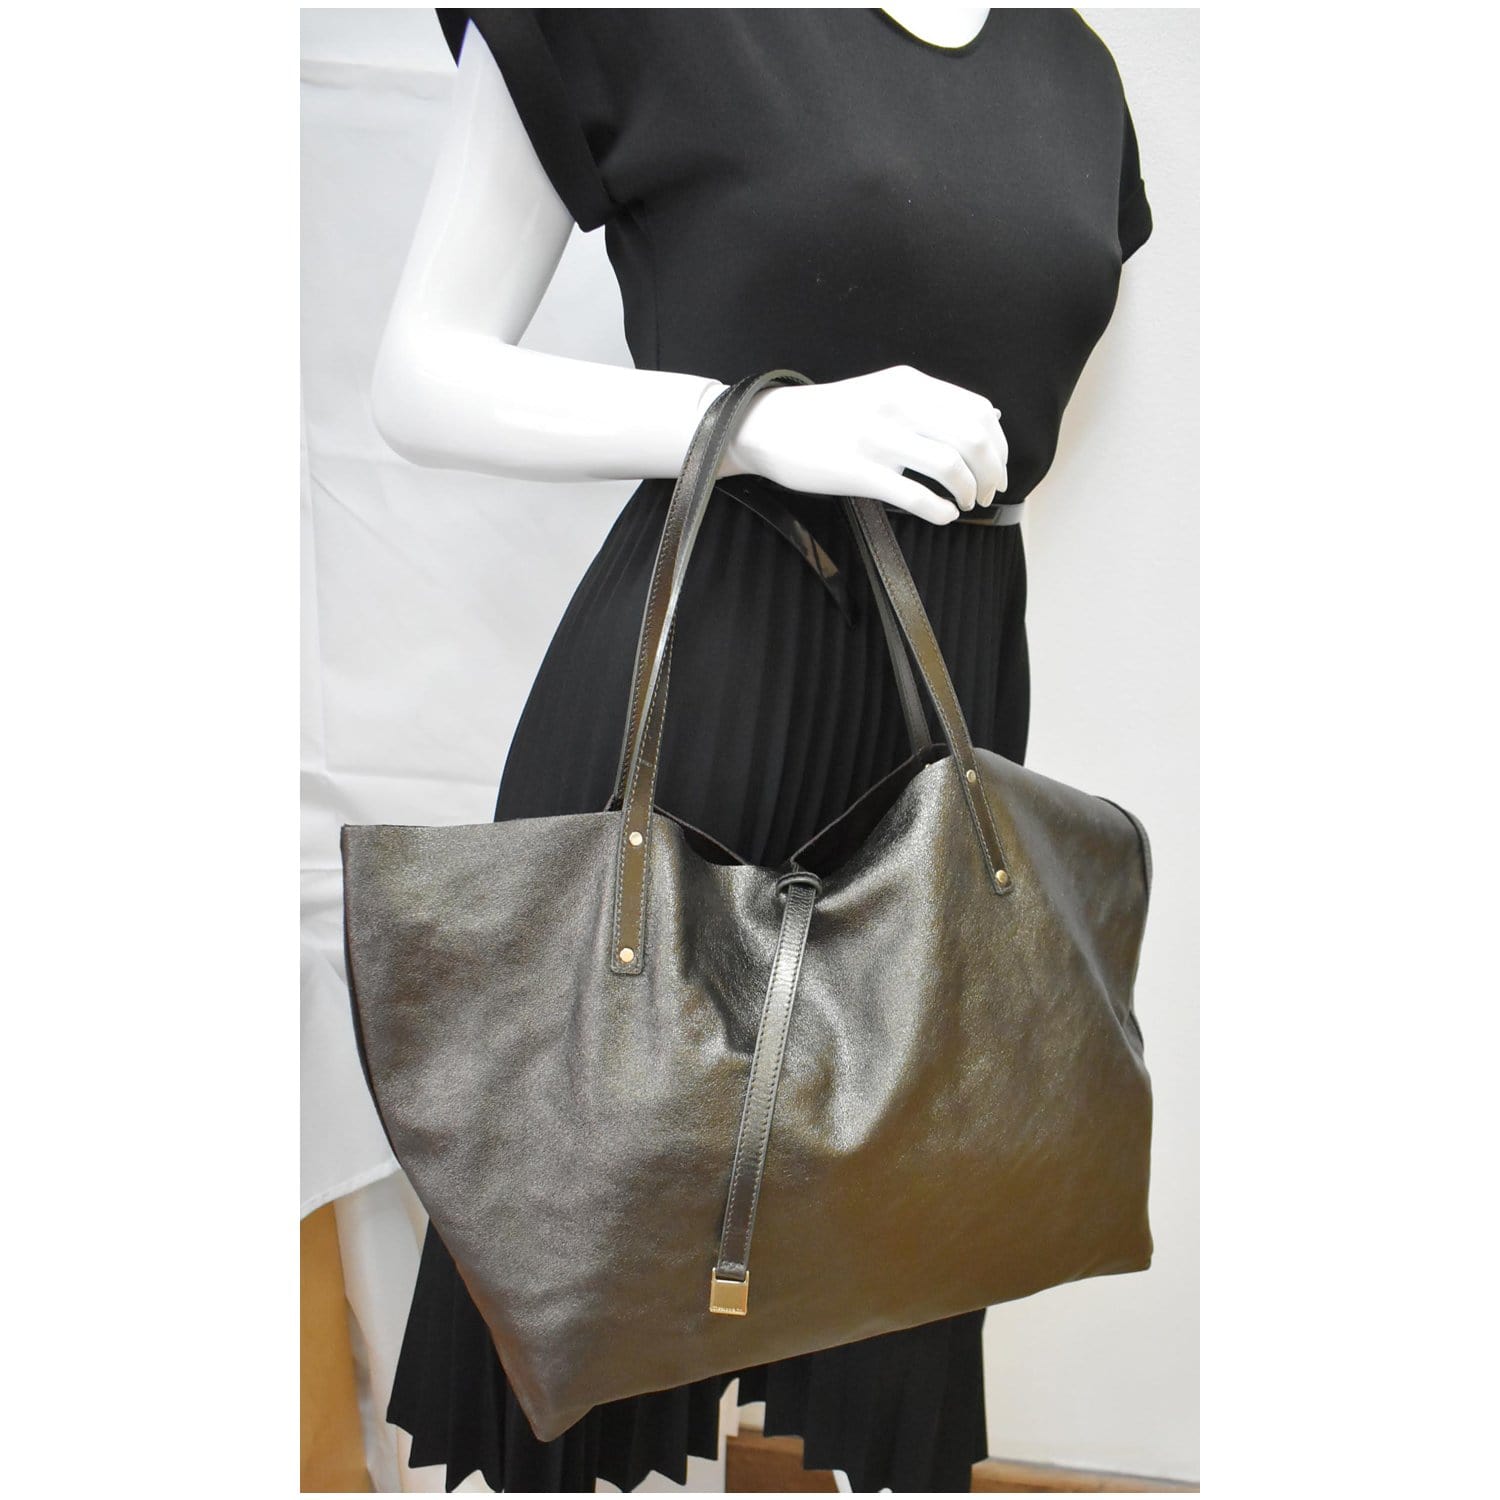 Tiffany & Co., Bags, Tiffany Co Reversible Bag Sold